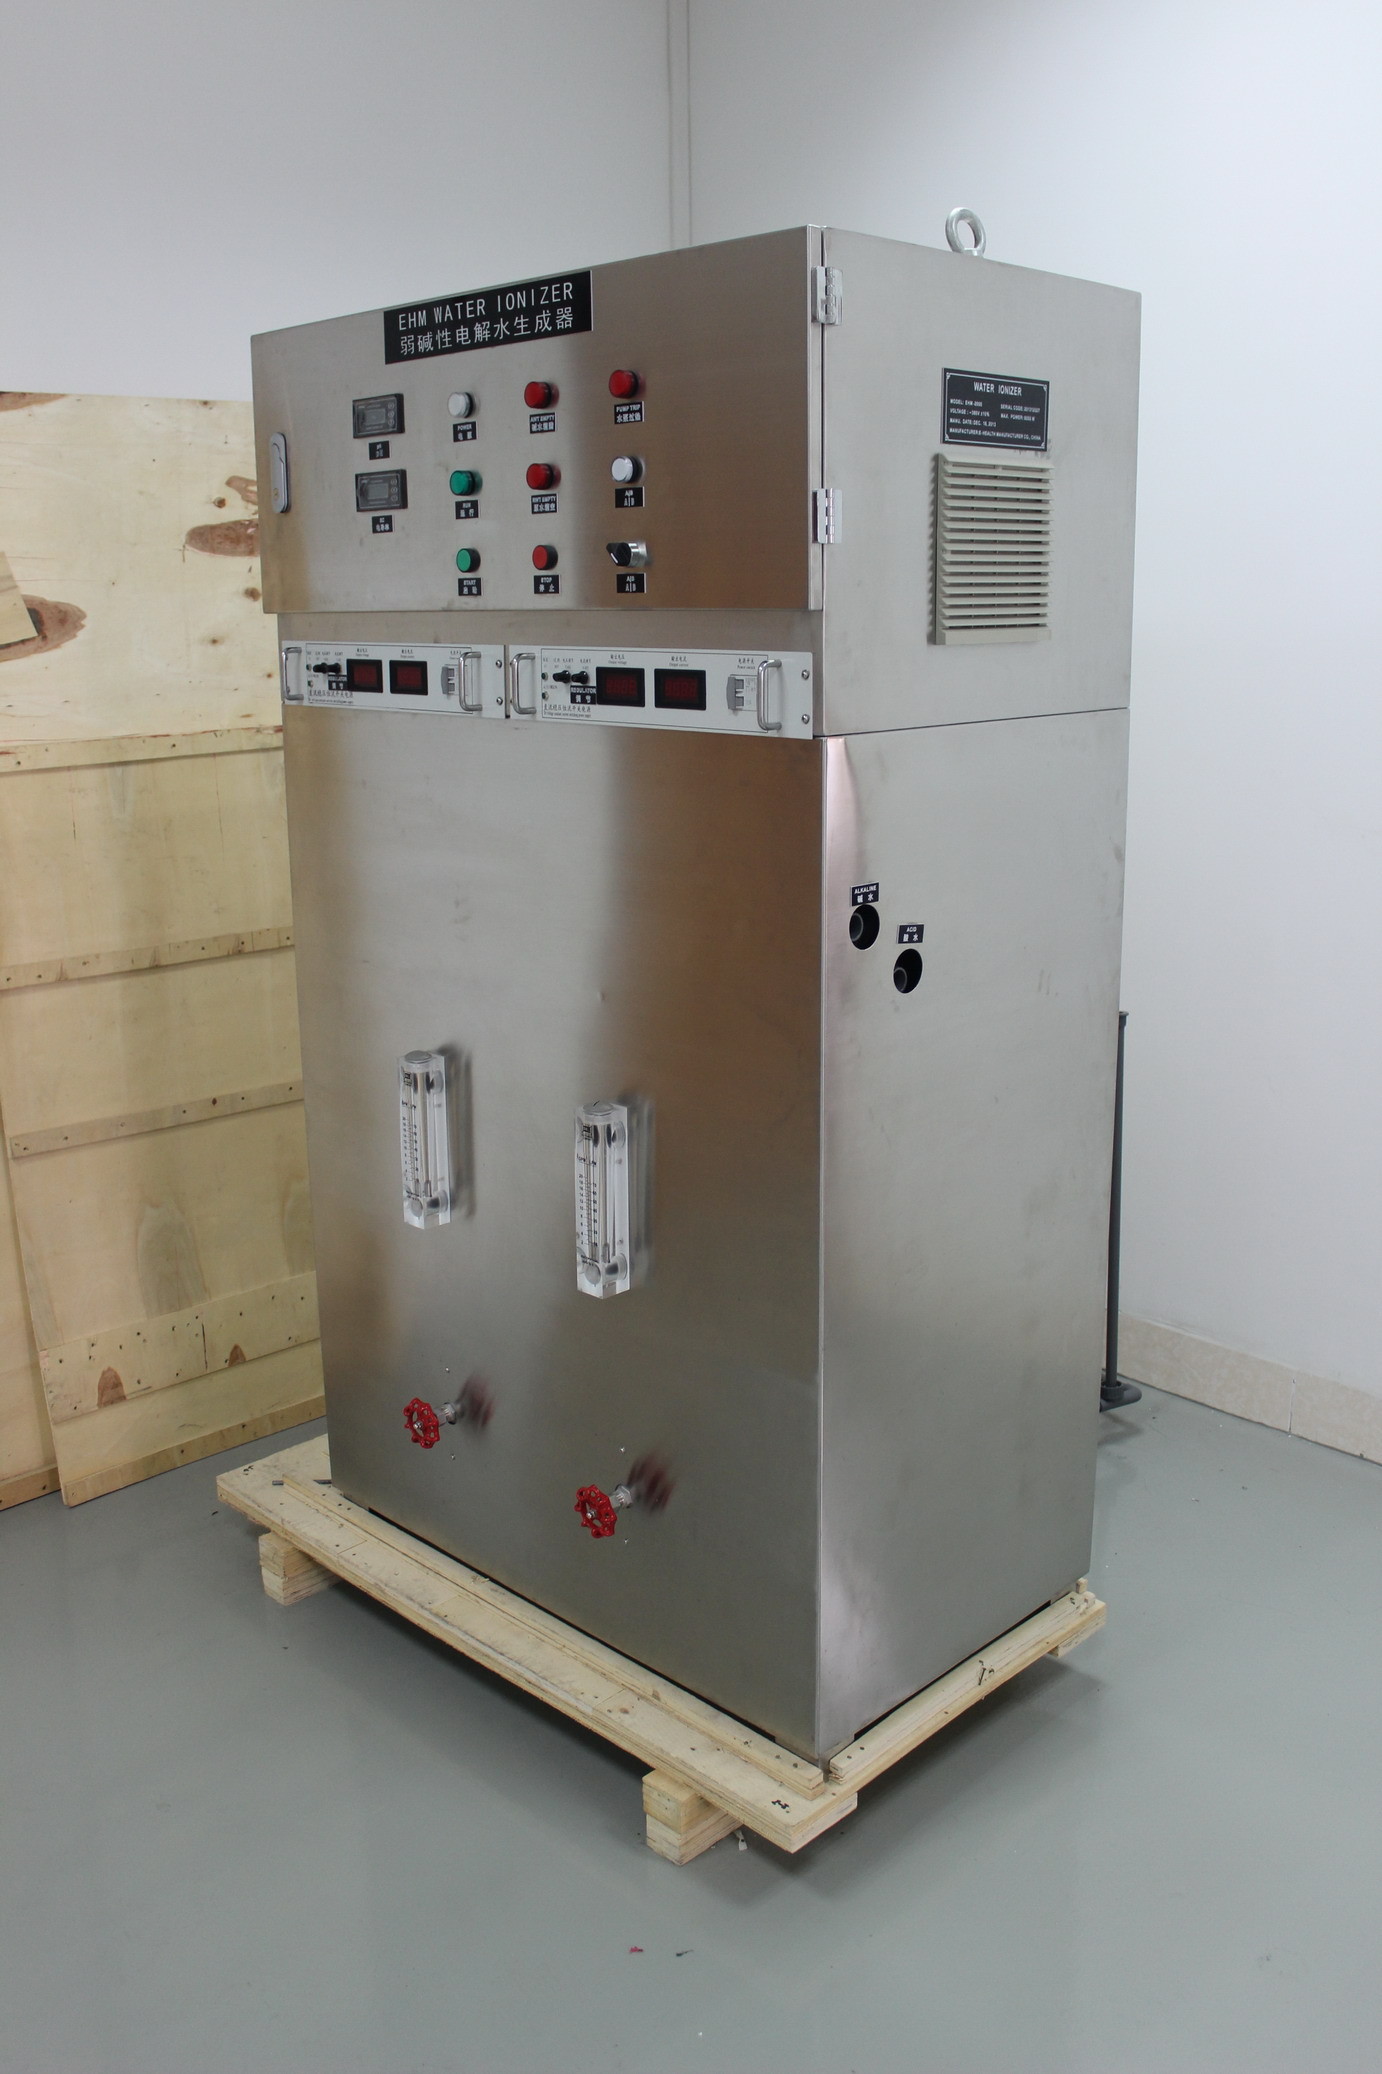 Groot capaciteitswater die ionizer met industrieel het systeemmodel ehm-1000 incoporating van de waterbehandeling